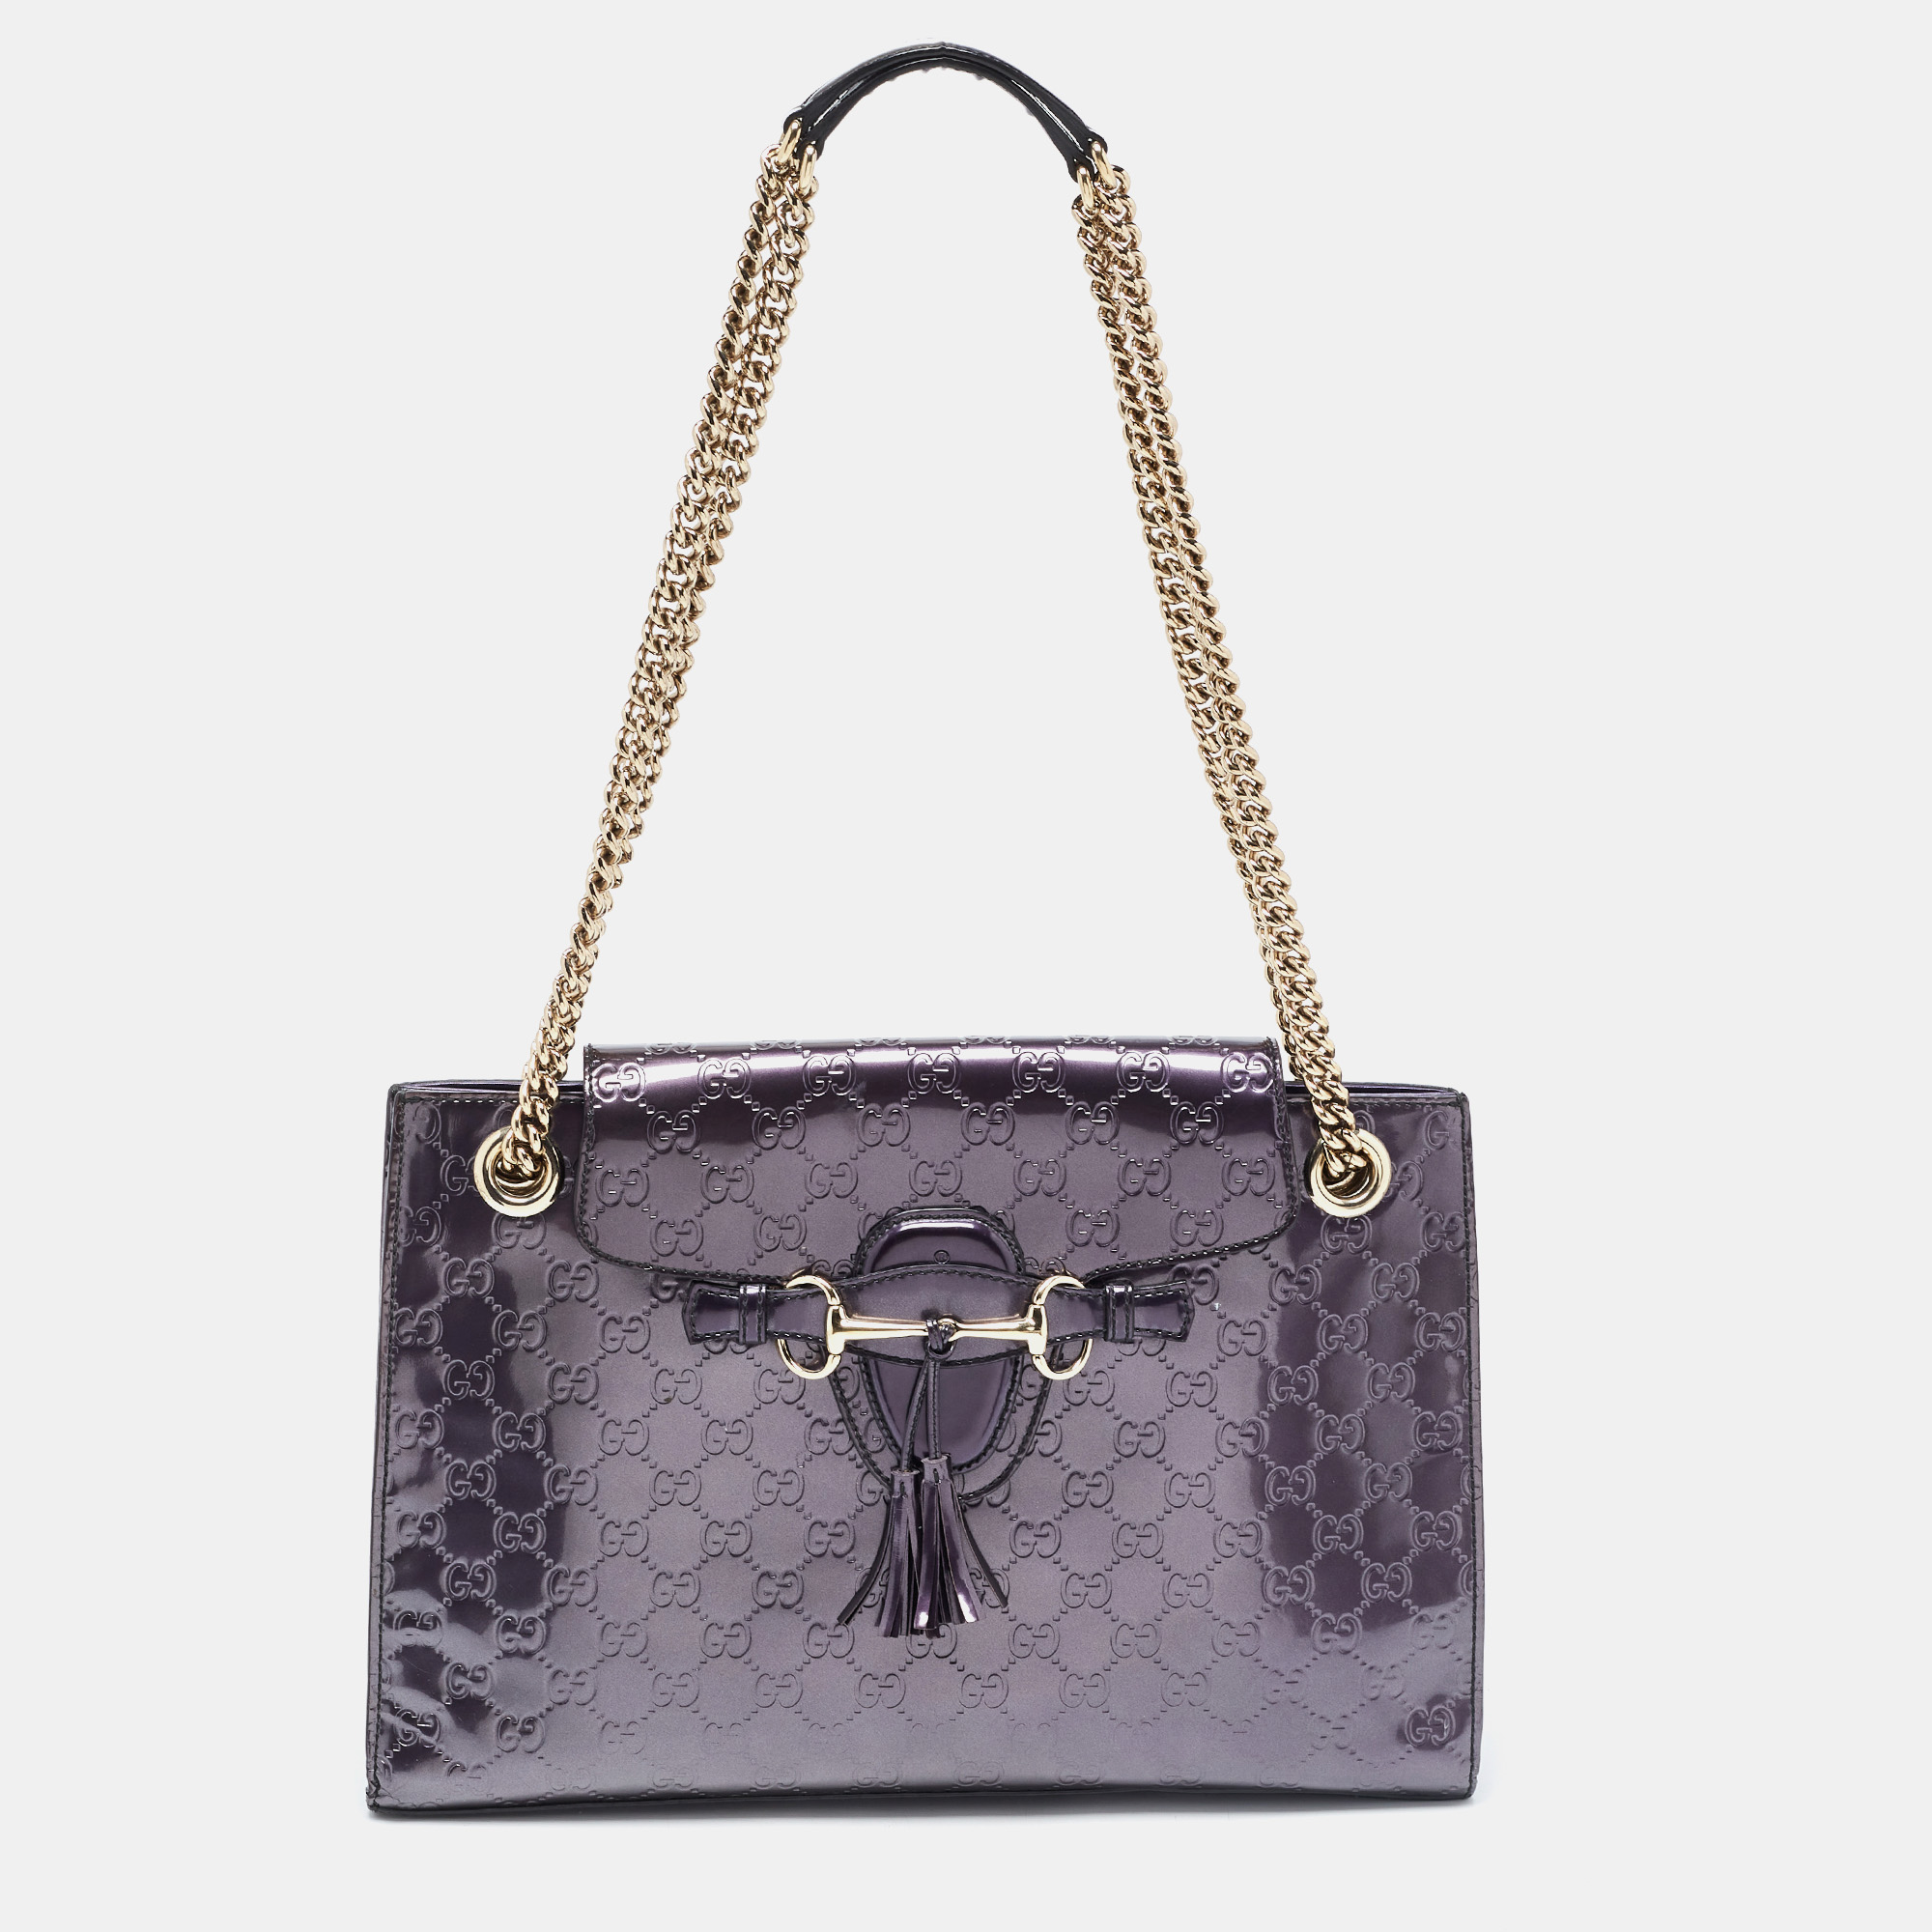 Gucci Purple Guccissima Patent Leather Large Emily Chain Shoulder Bag